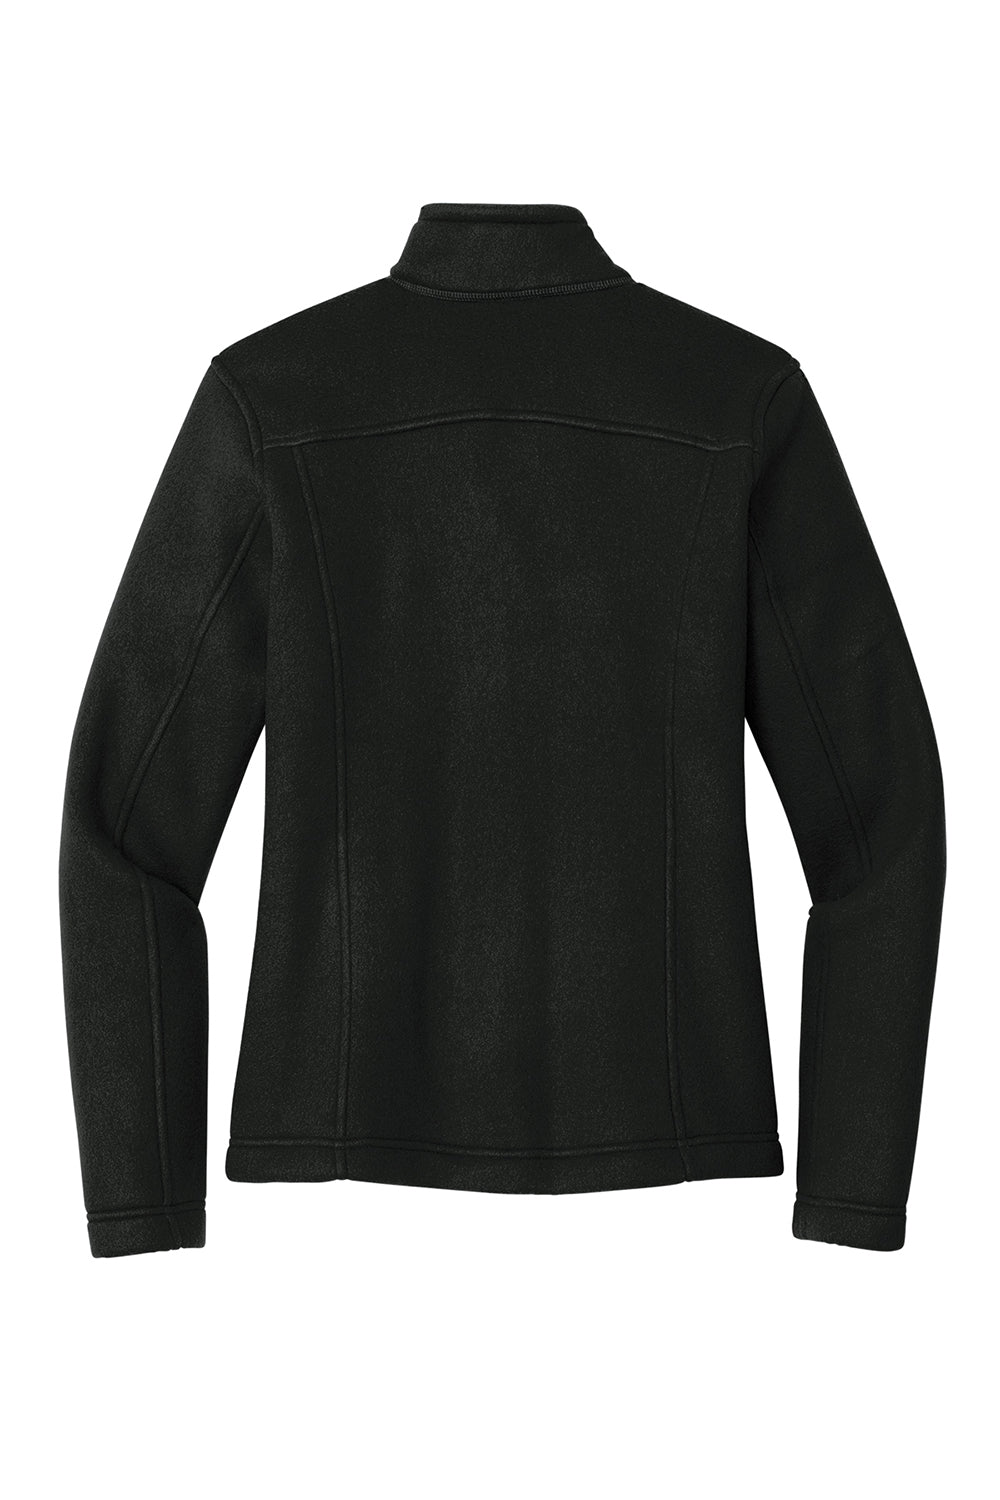 Eddie Bauer EB201 Womens Full Zip Fleece Jacket Black Flat Back